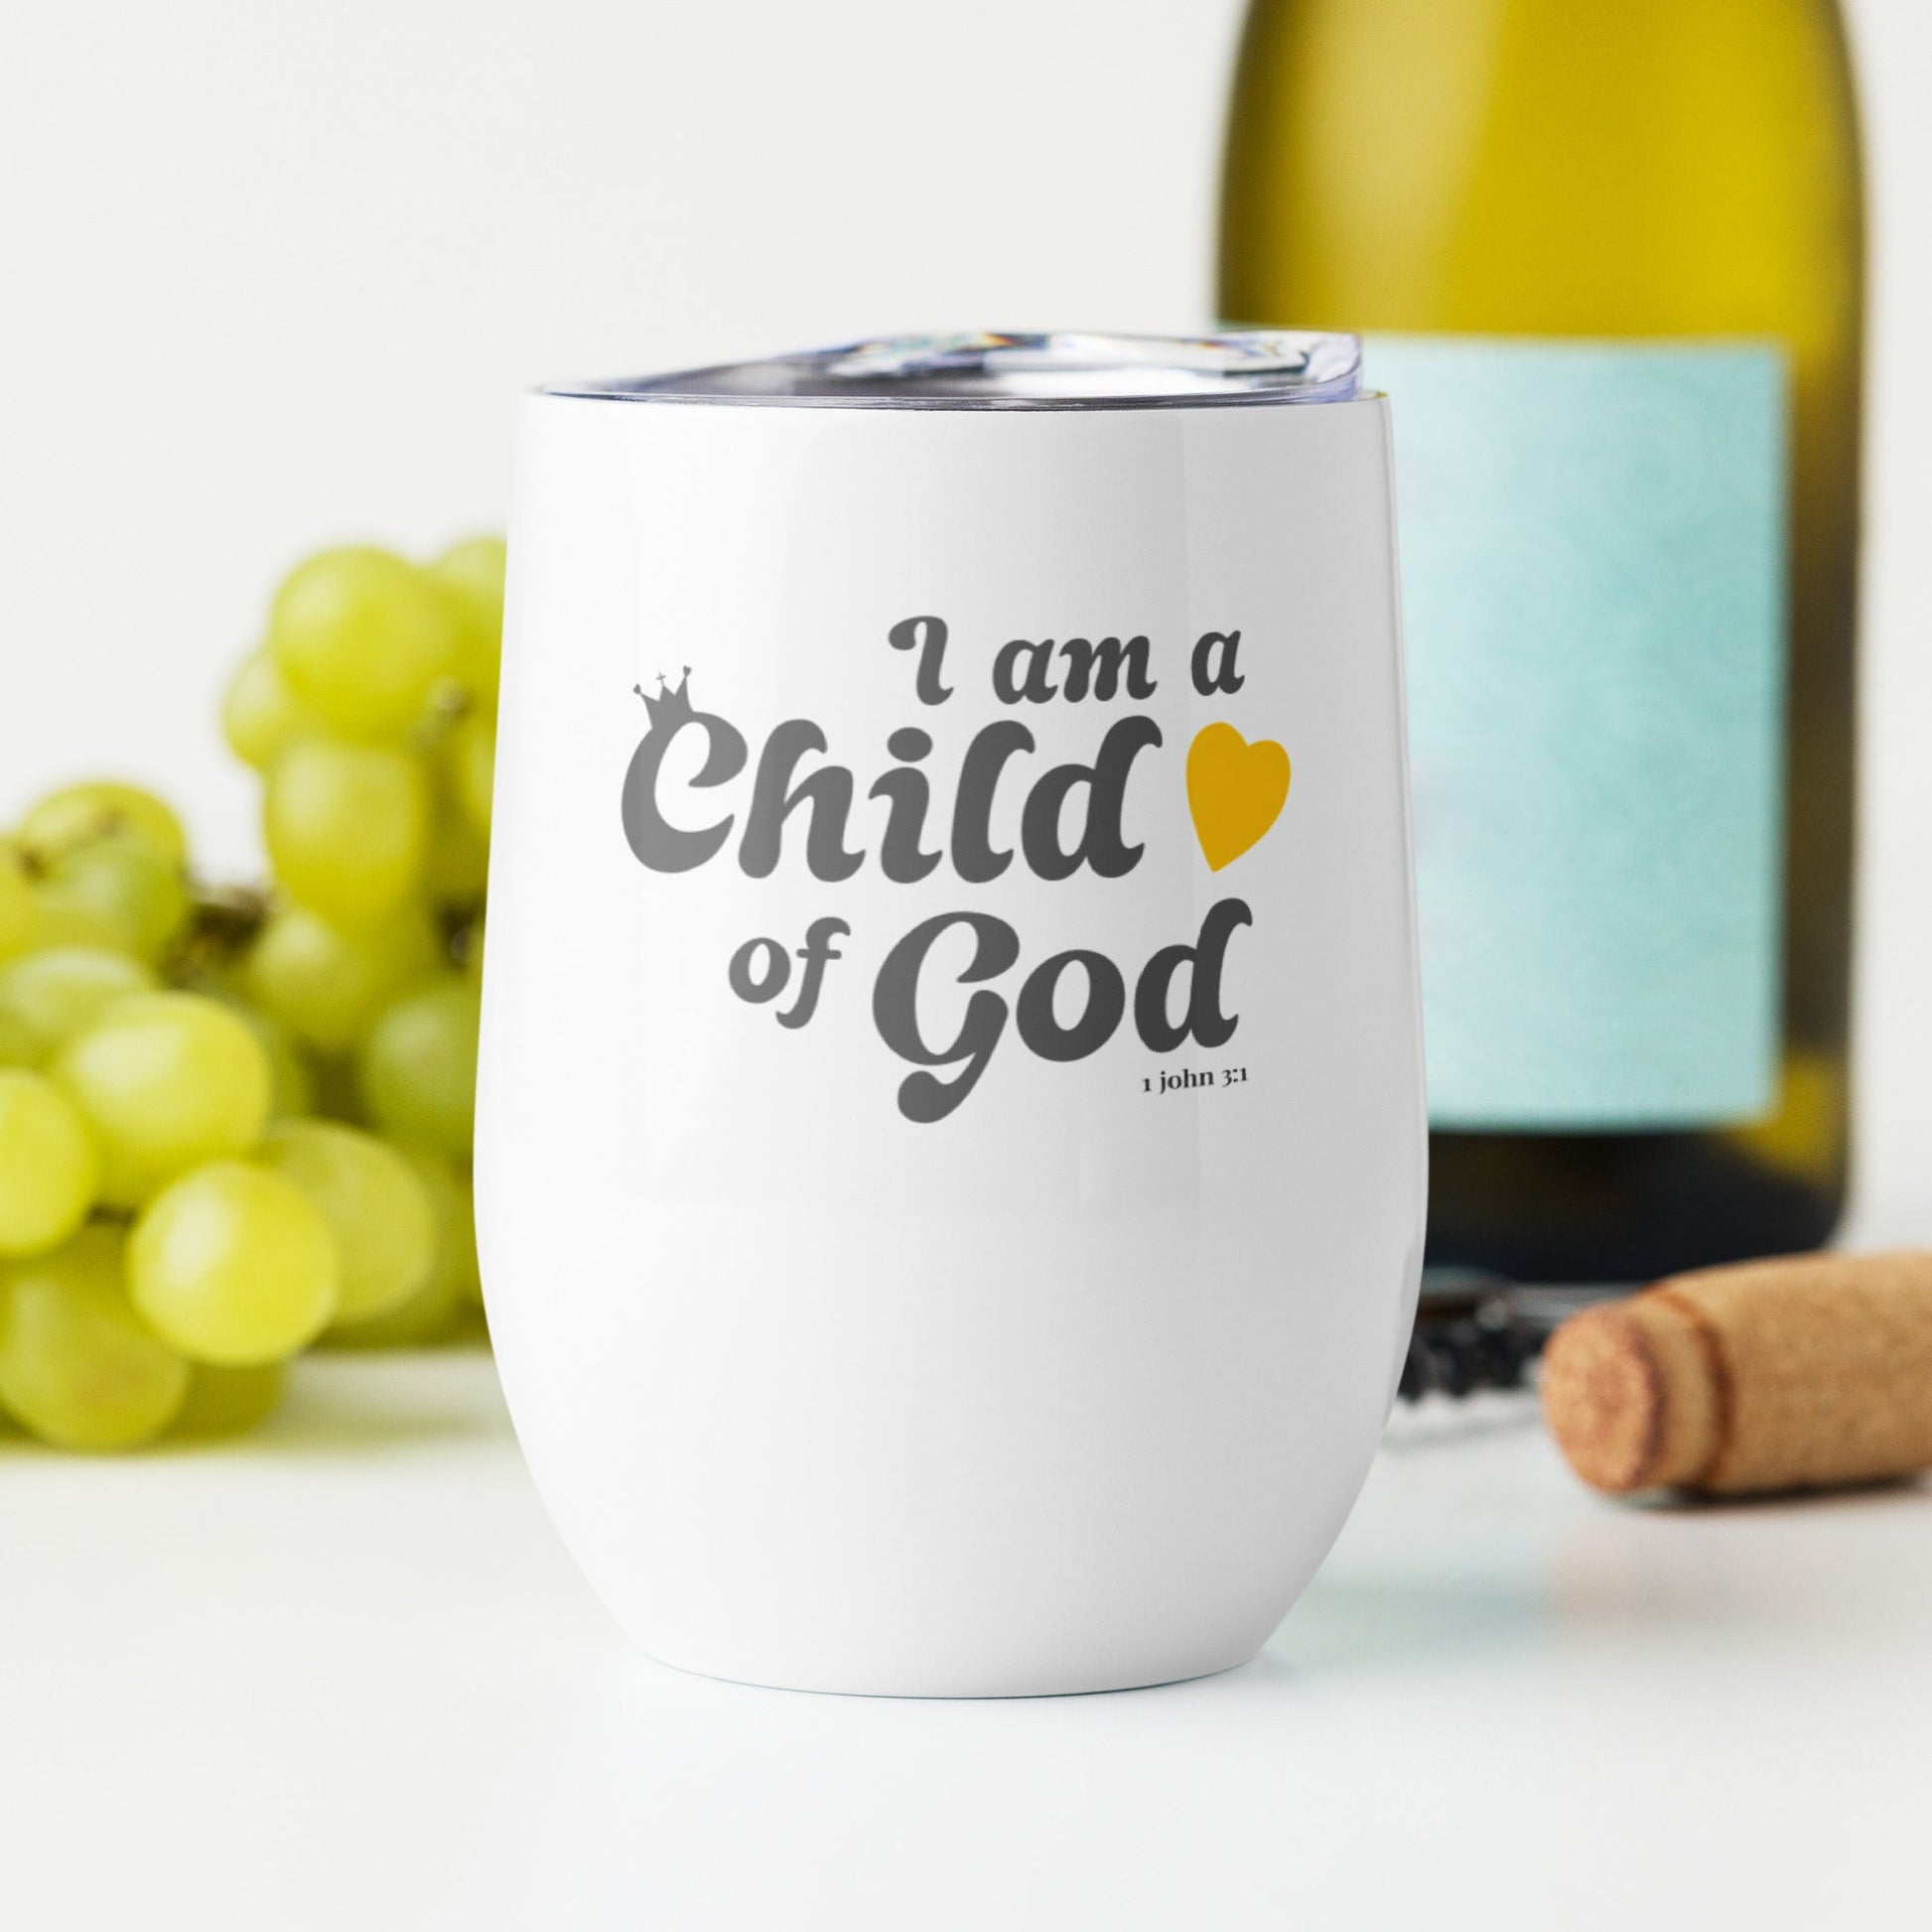 I am a Child of God - Wine tumbler - Creation Awaits